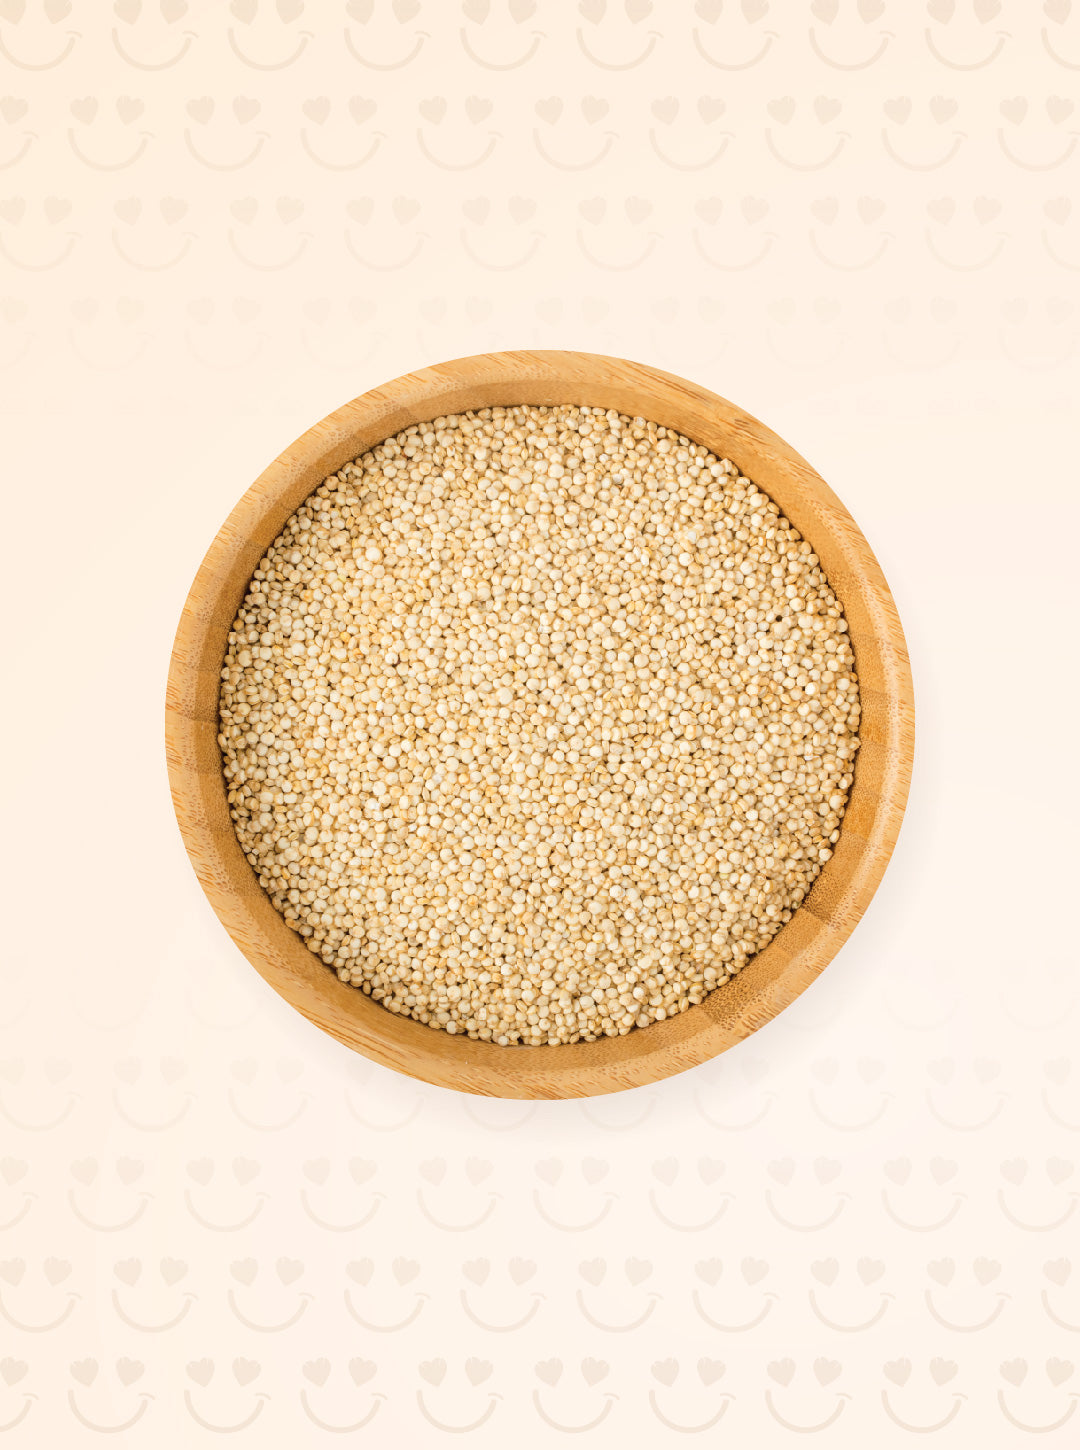 Quinoa Seeds 1 Kilogram